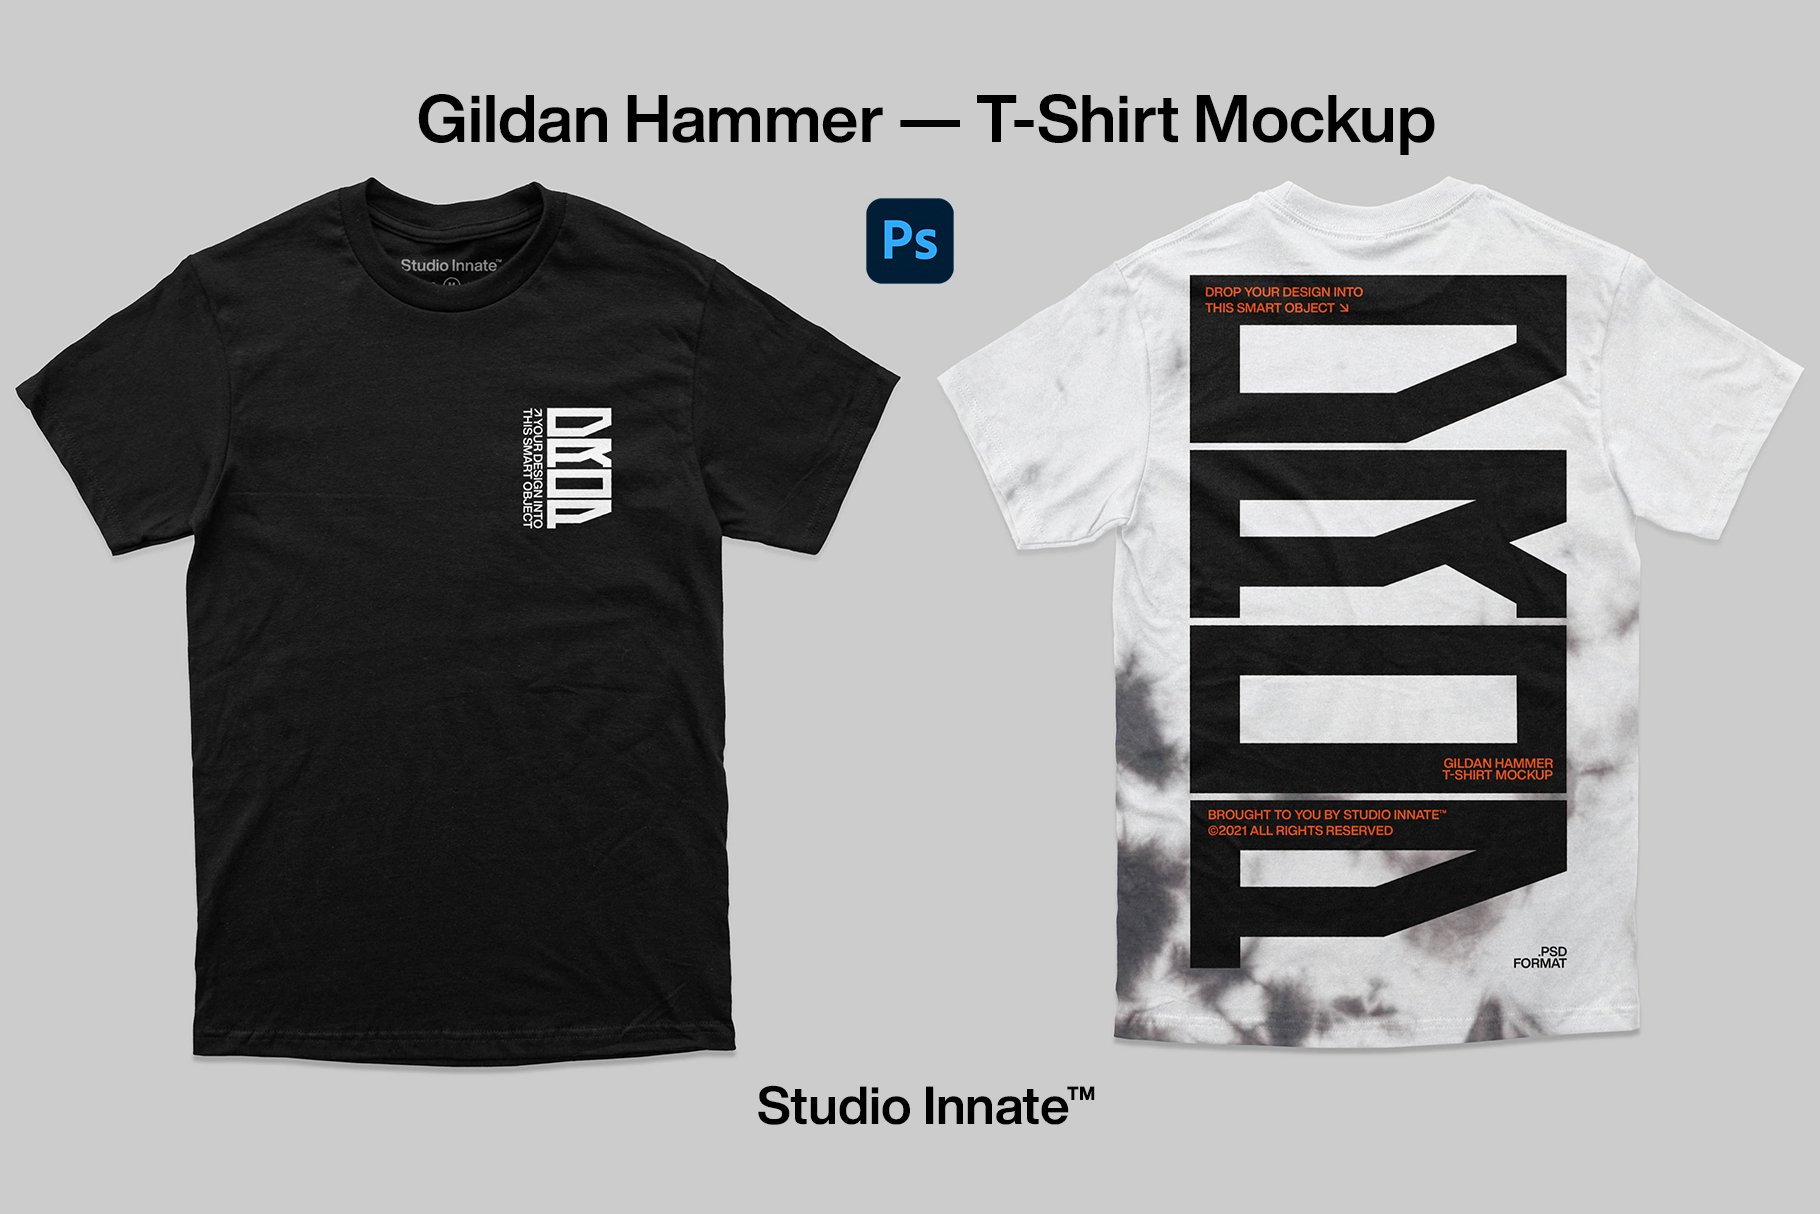 Gildan Hammer T-Shirt Mockup cover image.